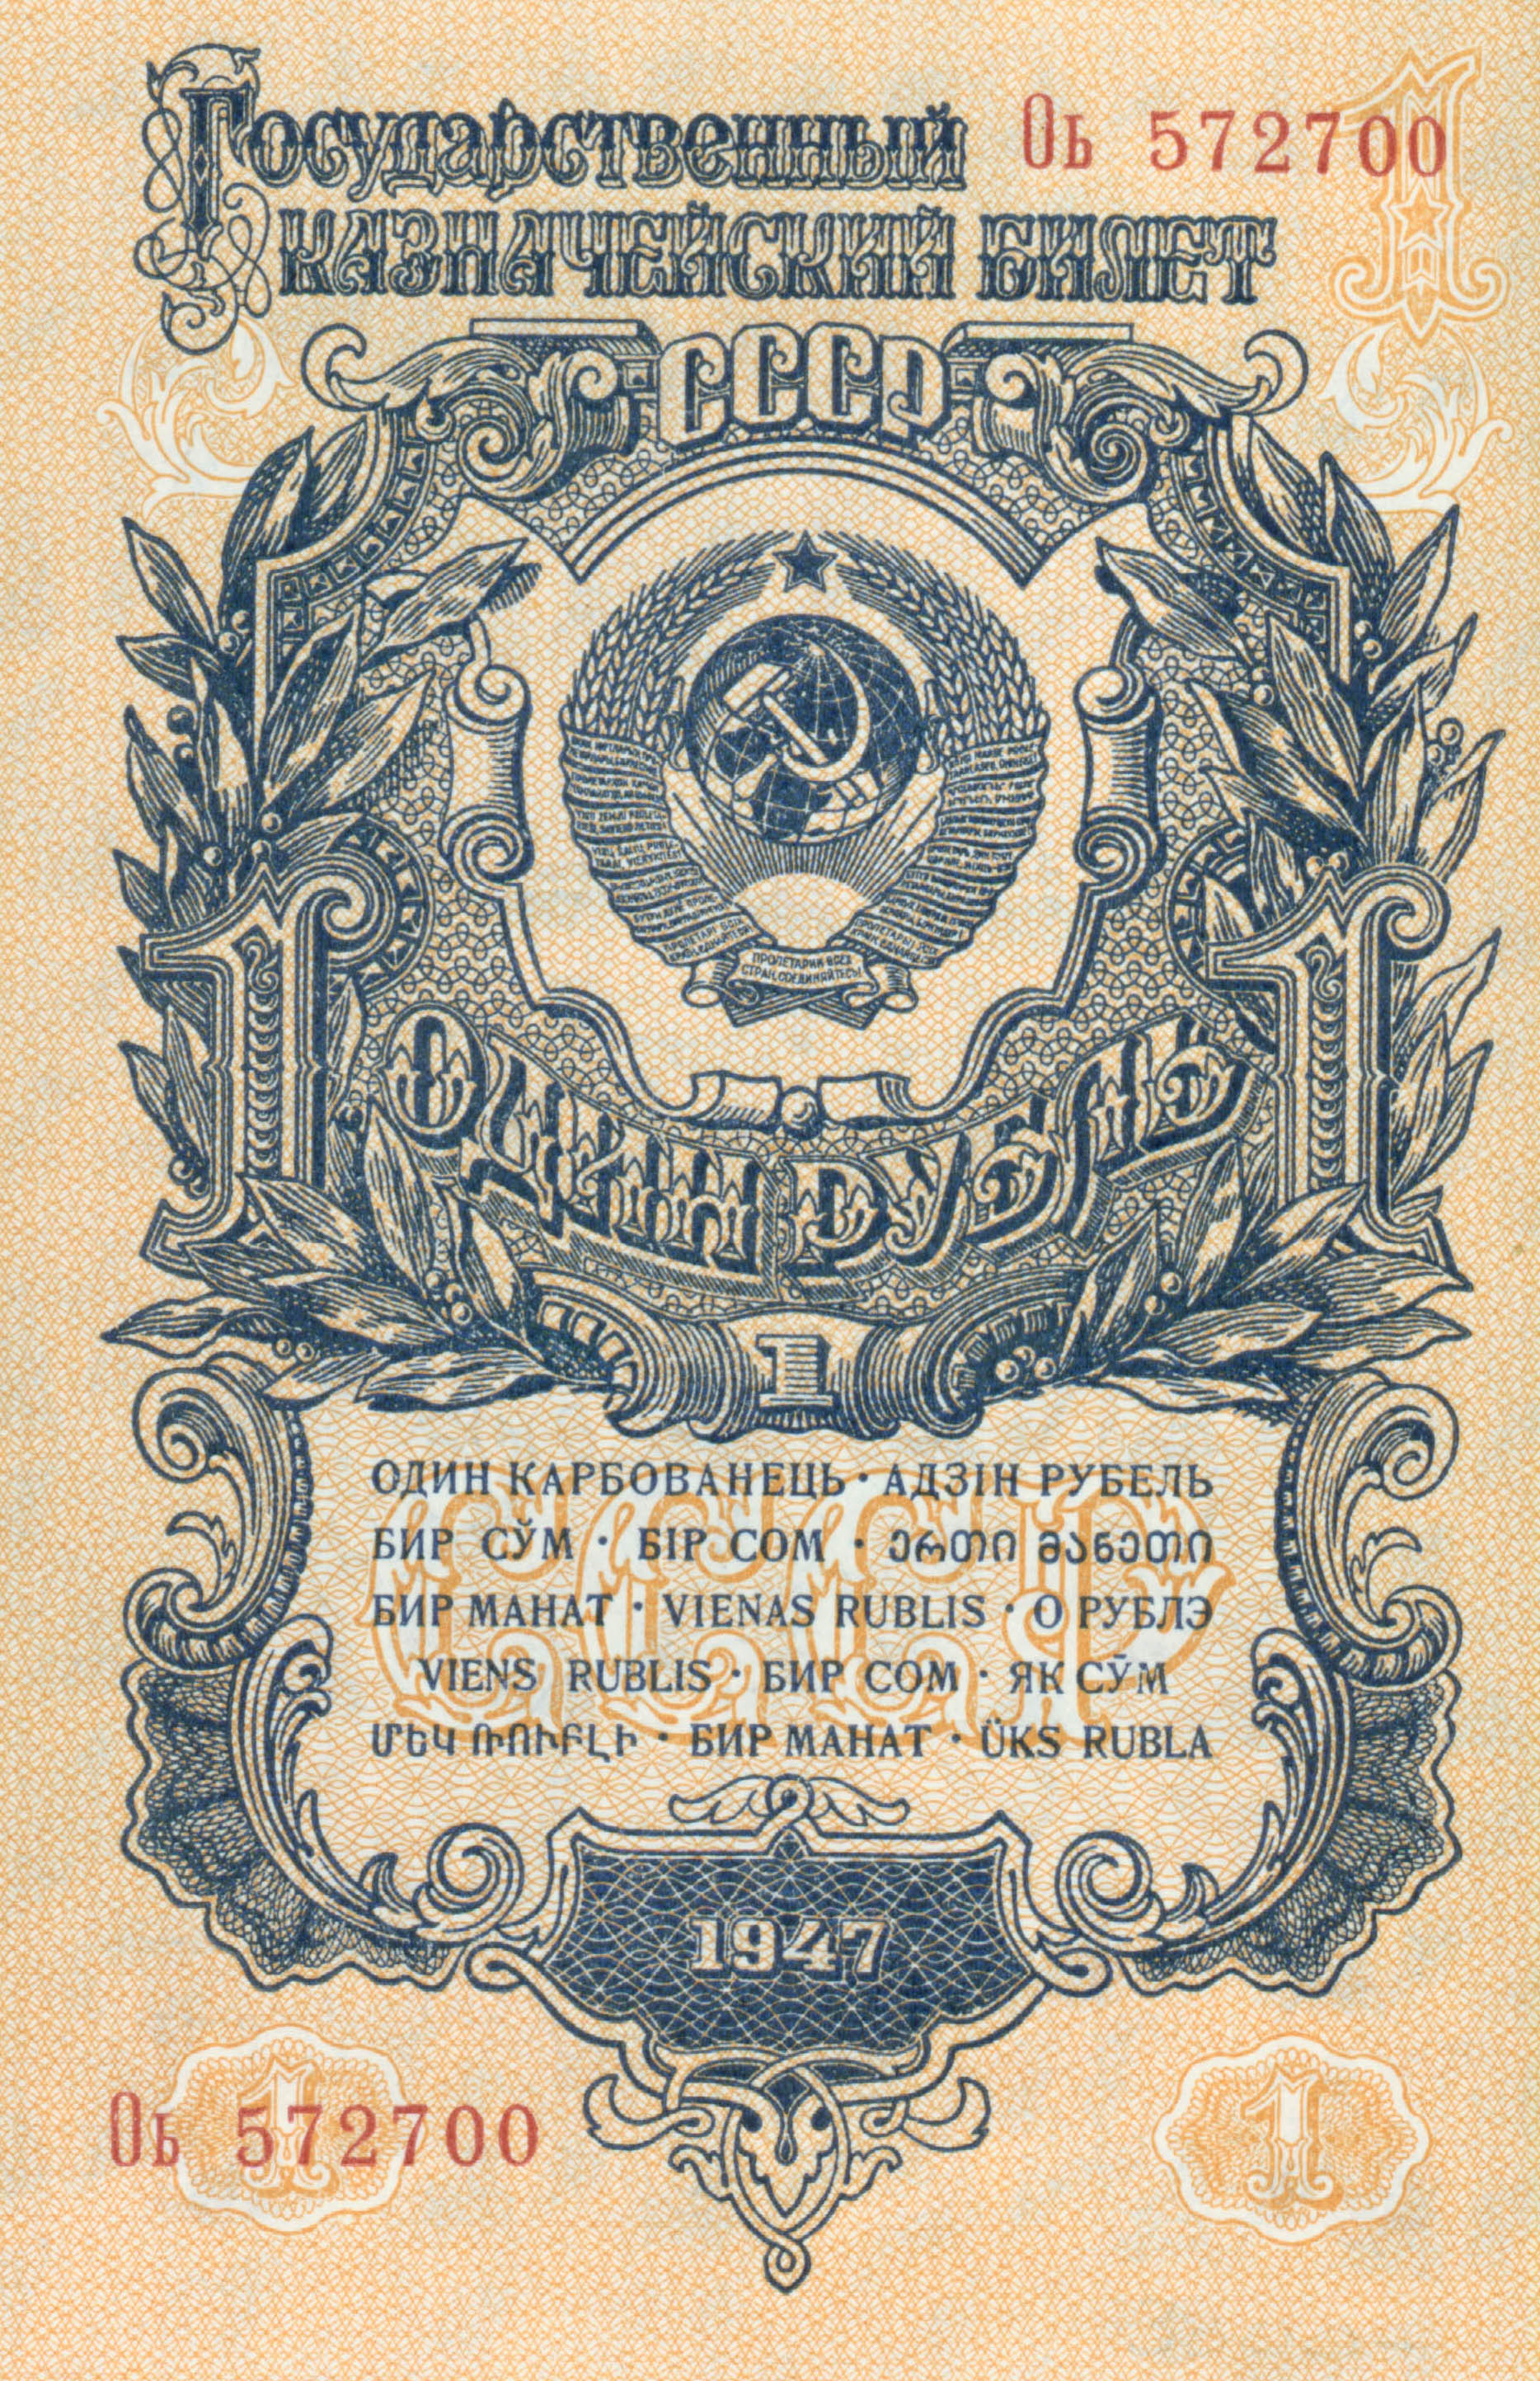 1 рубль 1947 года выпуска